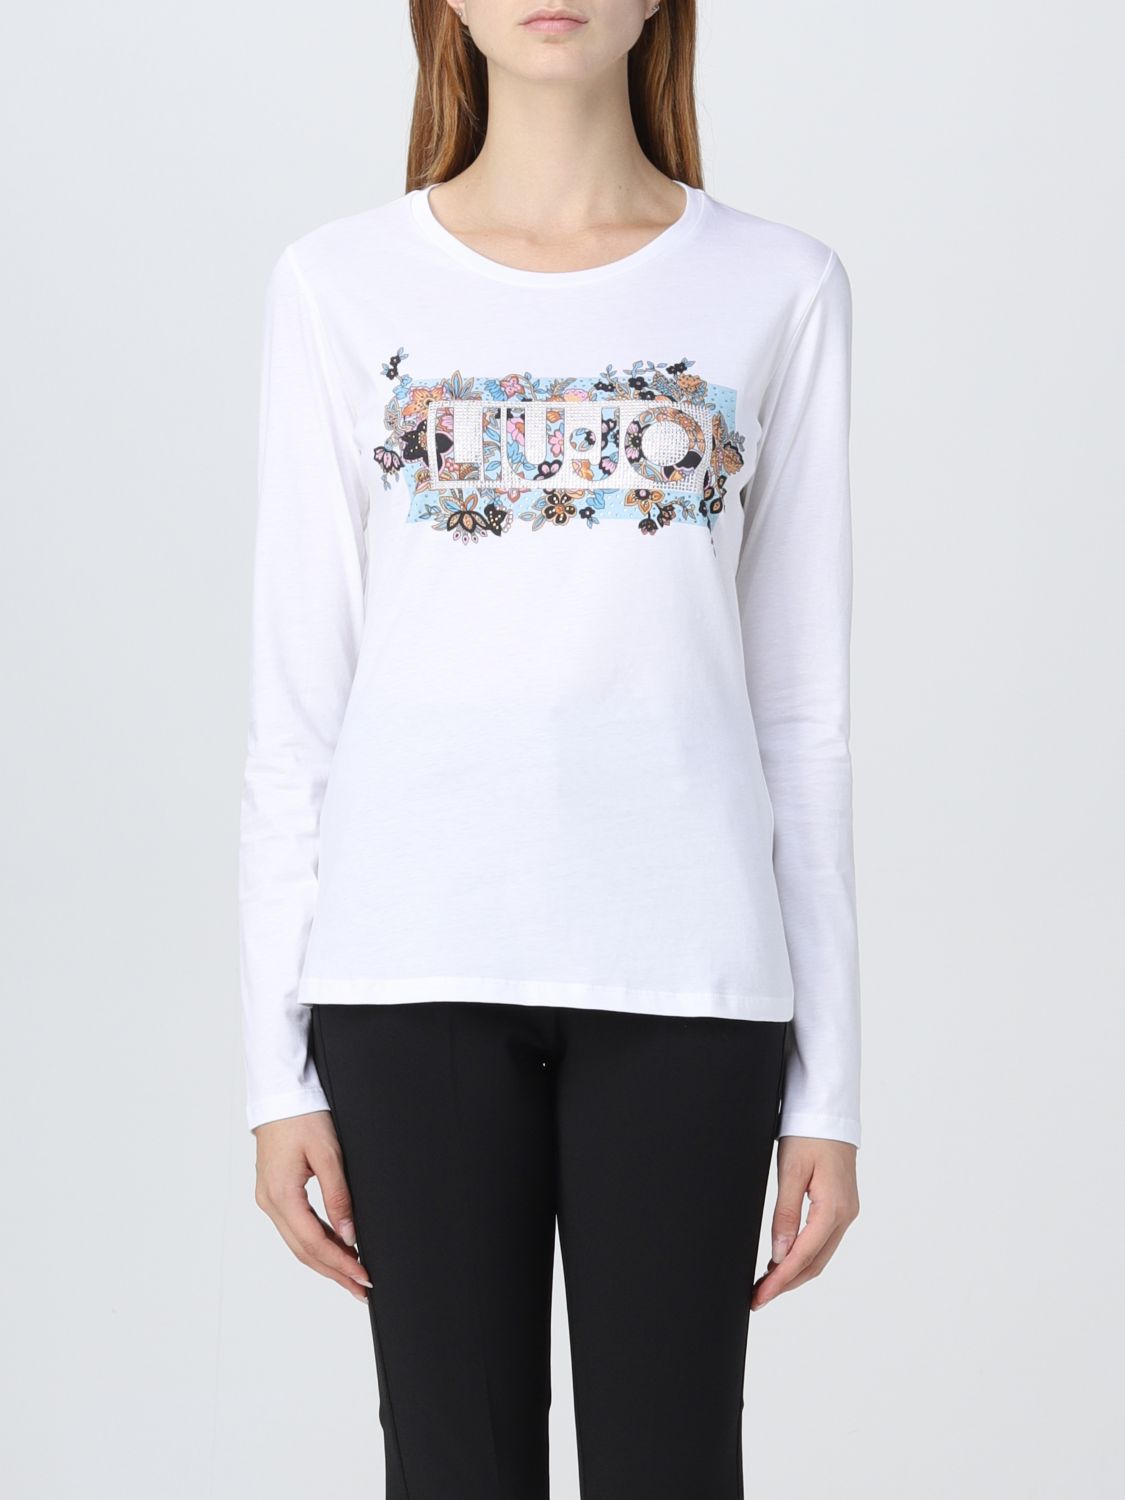 Women's Louis Féraud T-shirt, size 40 (White)